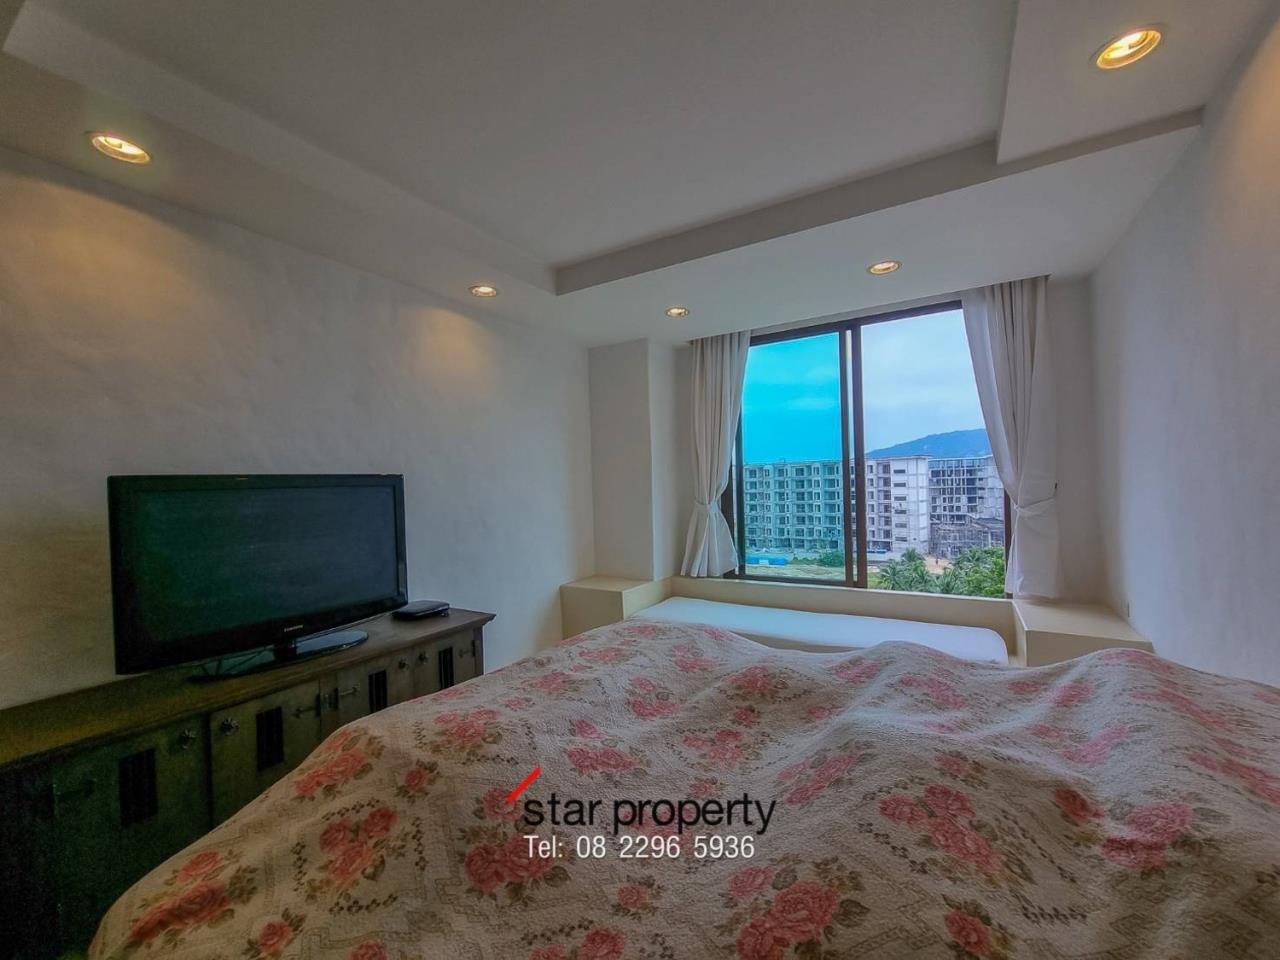 Star Property Hua Hin Co., Ltd Agency's Hot Deal Two Bed Room Condo At Lastortugas Hua Hin 8